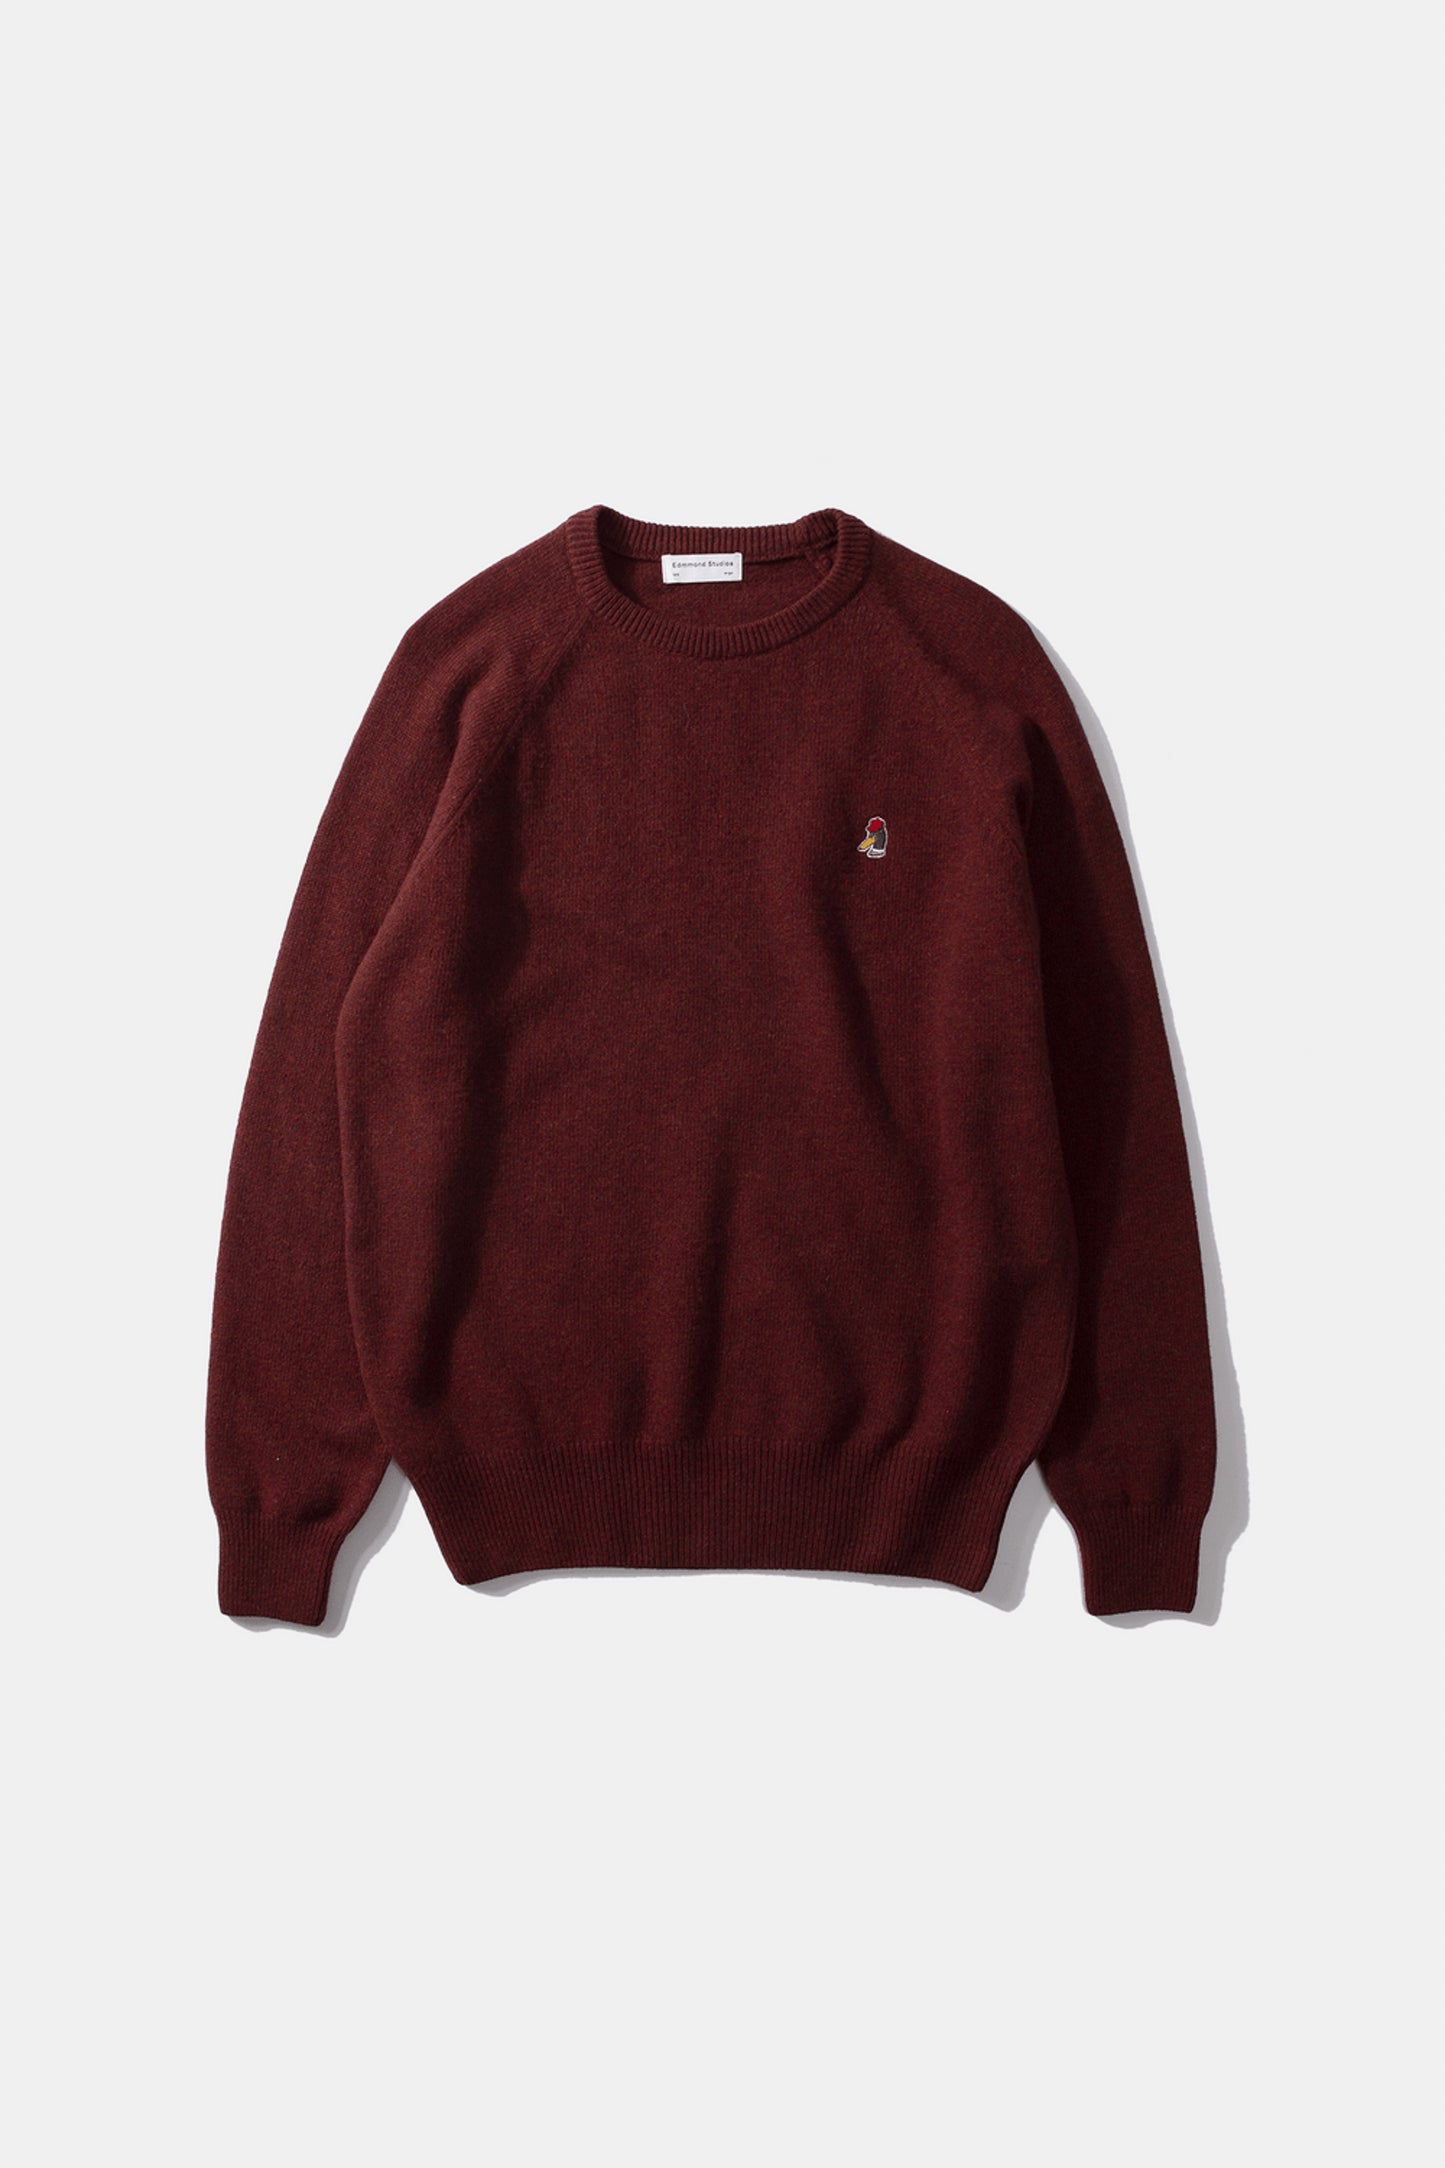 Special Duck Sweater - Plain Brick